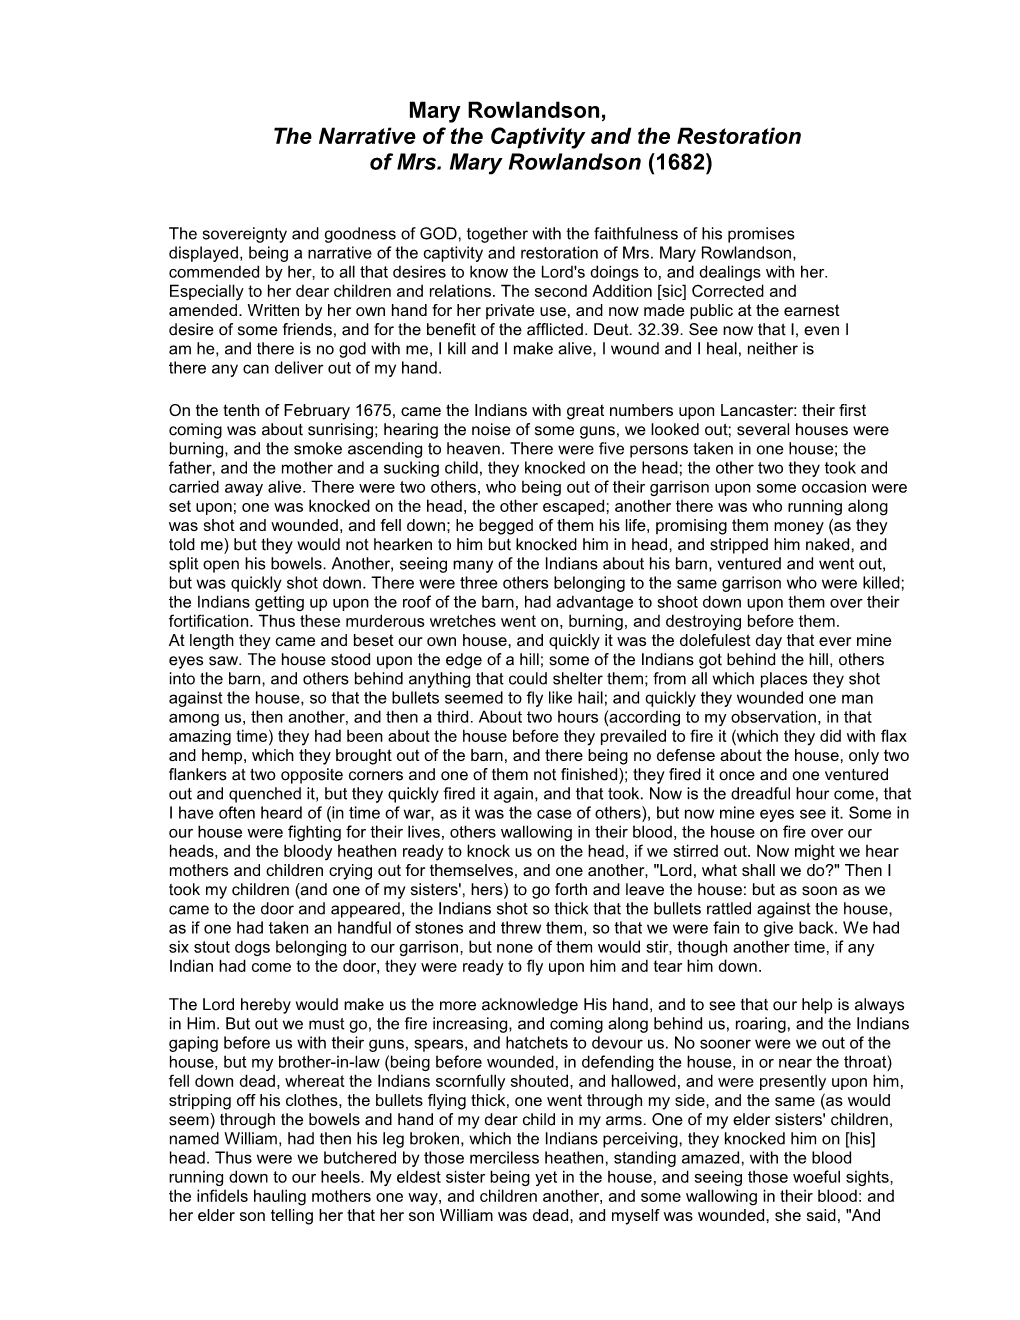 Mary Rowlandson, the Narrative of the Captivity and the Restoration of Mrs. Mary Rowlandson s2